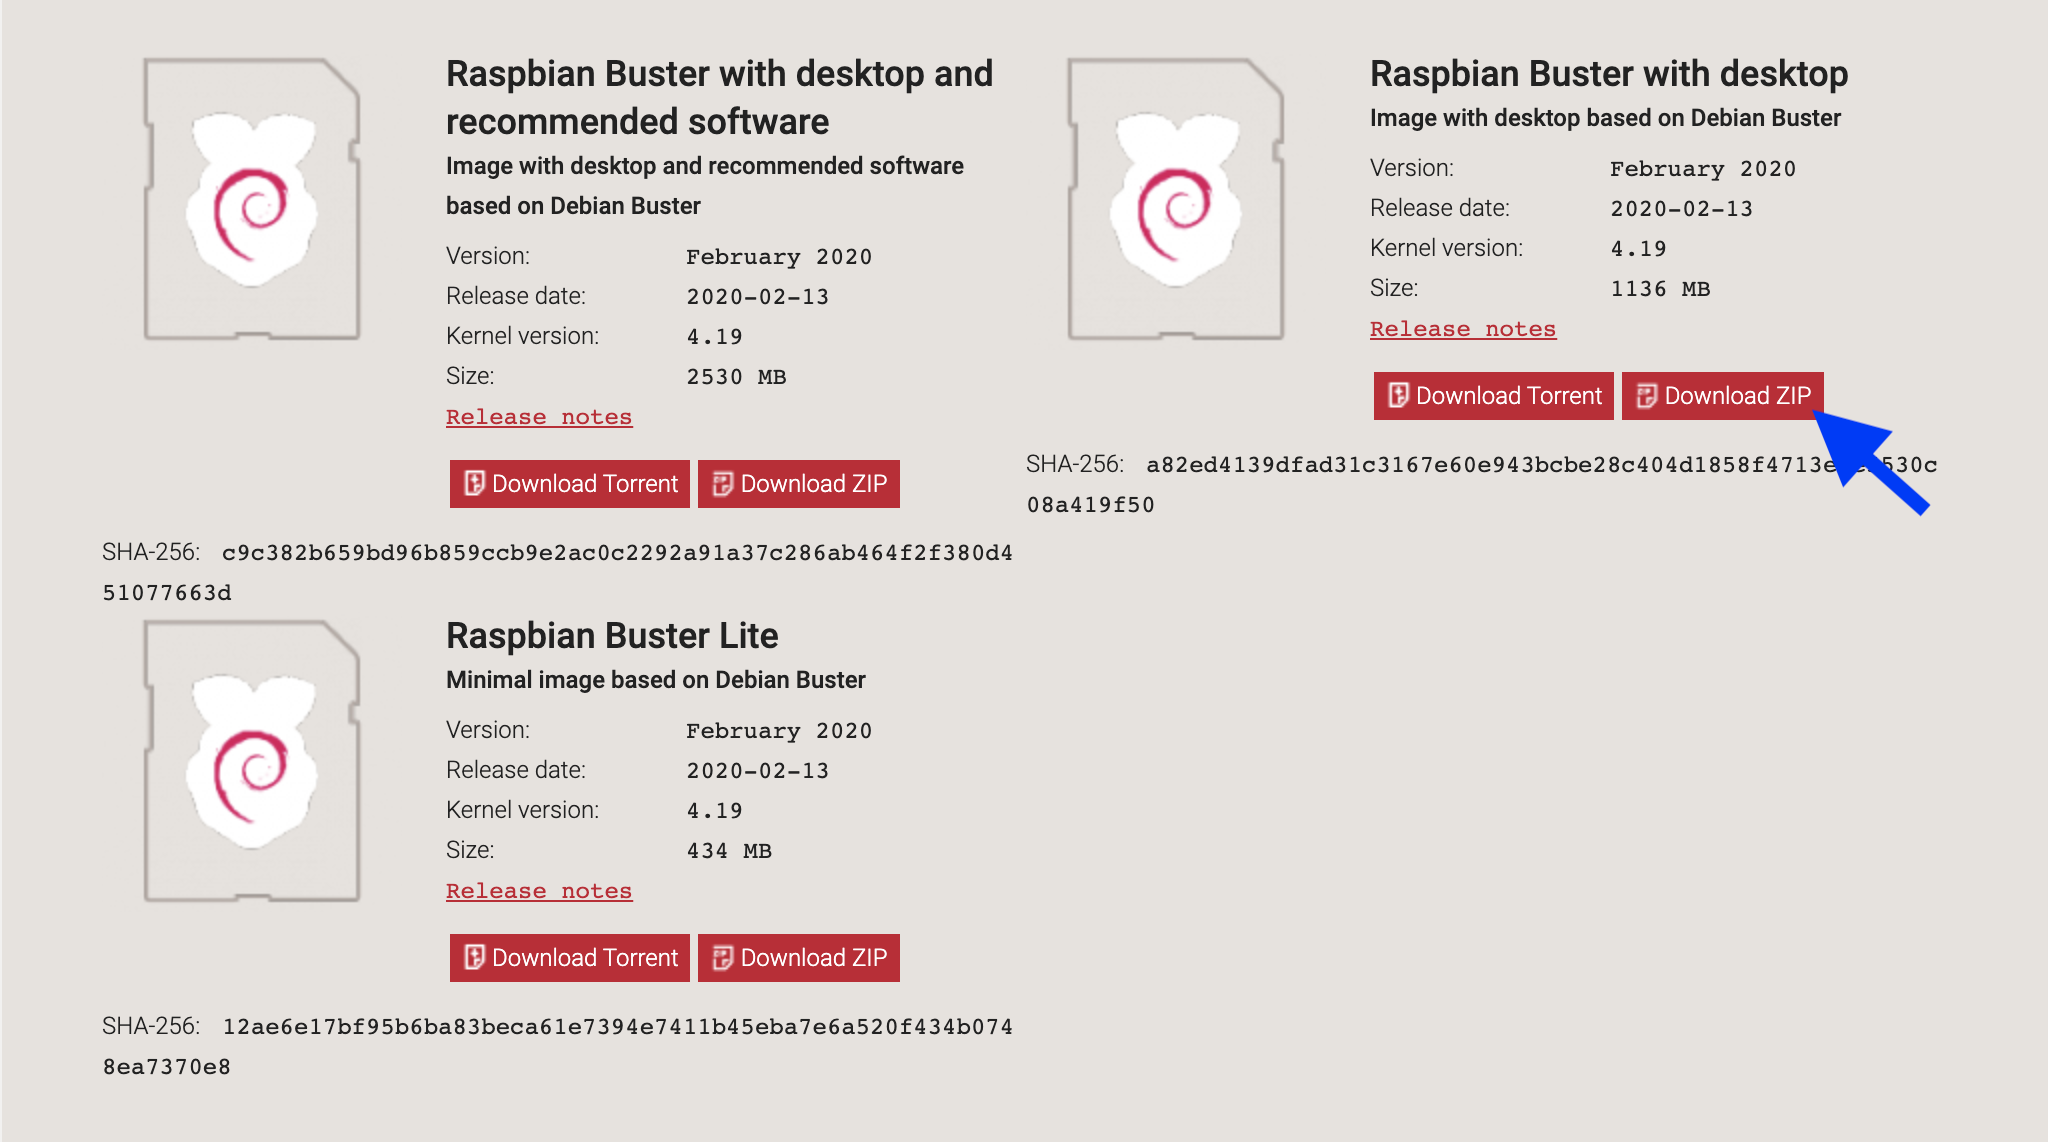 Raspbian Buster with desktop